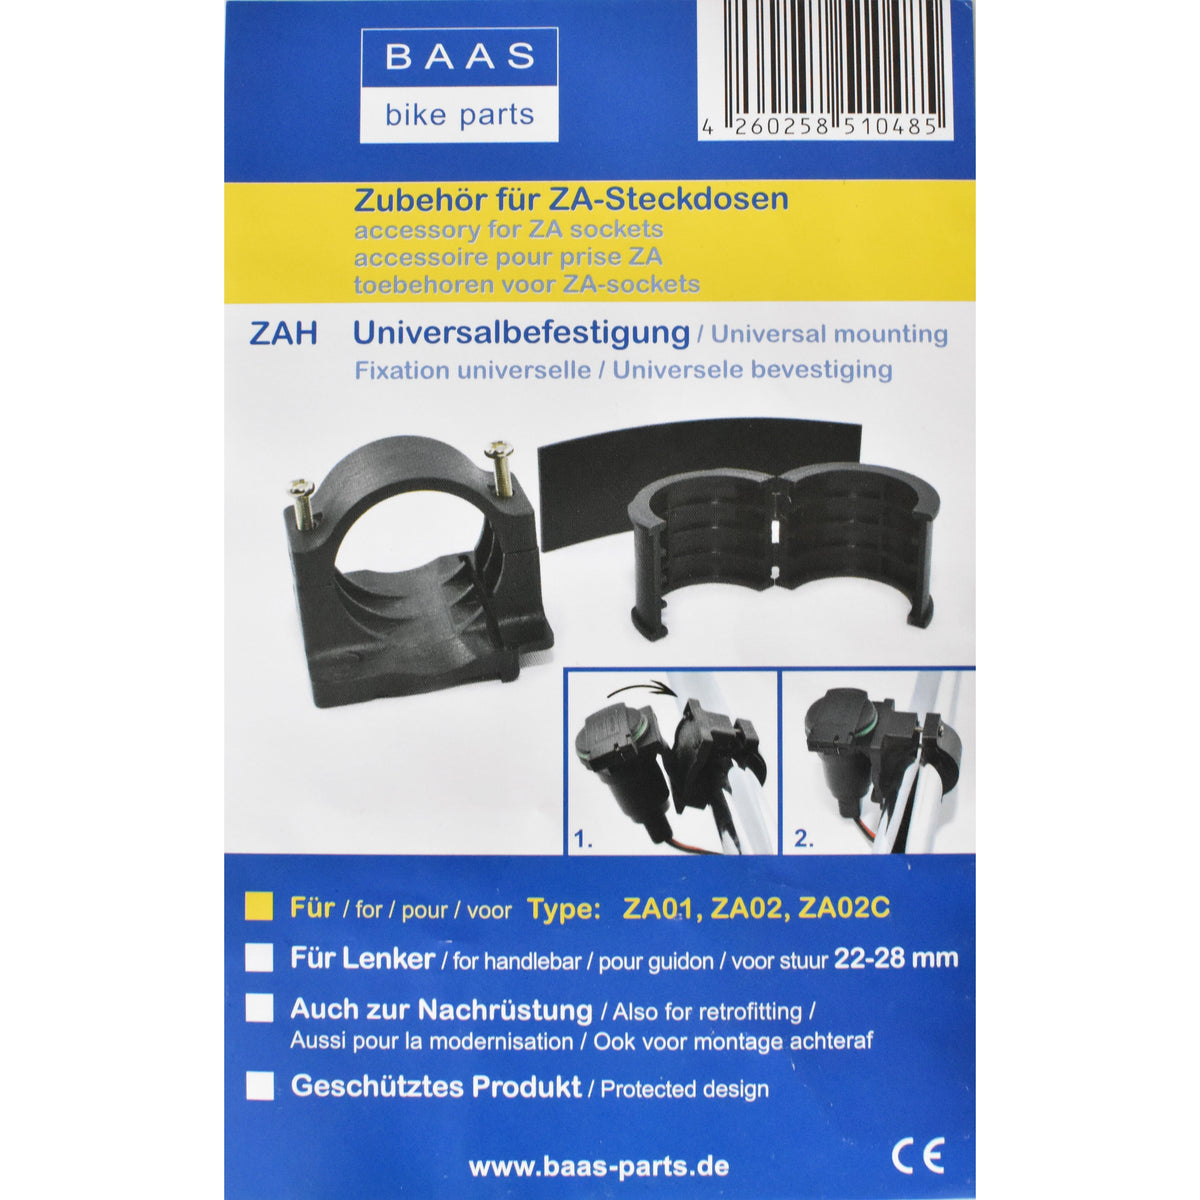 Zubehör BAAS ZA-Steckdosen: Universalbefestigung für Motorrad Lenkermontage Produktinformationsblatt